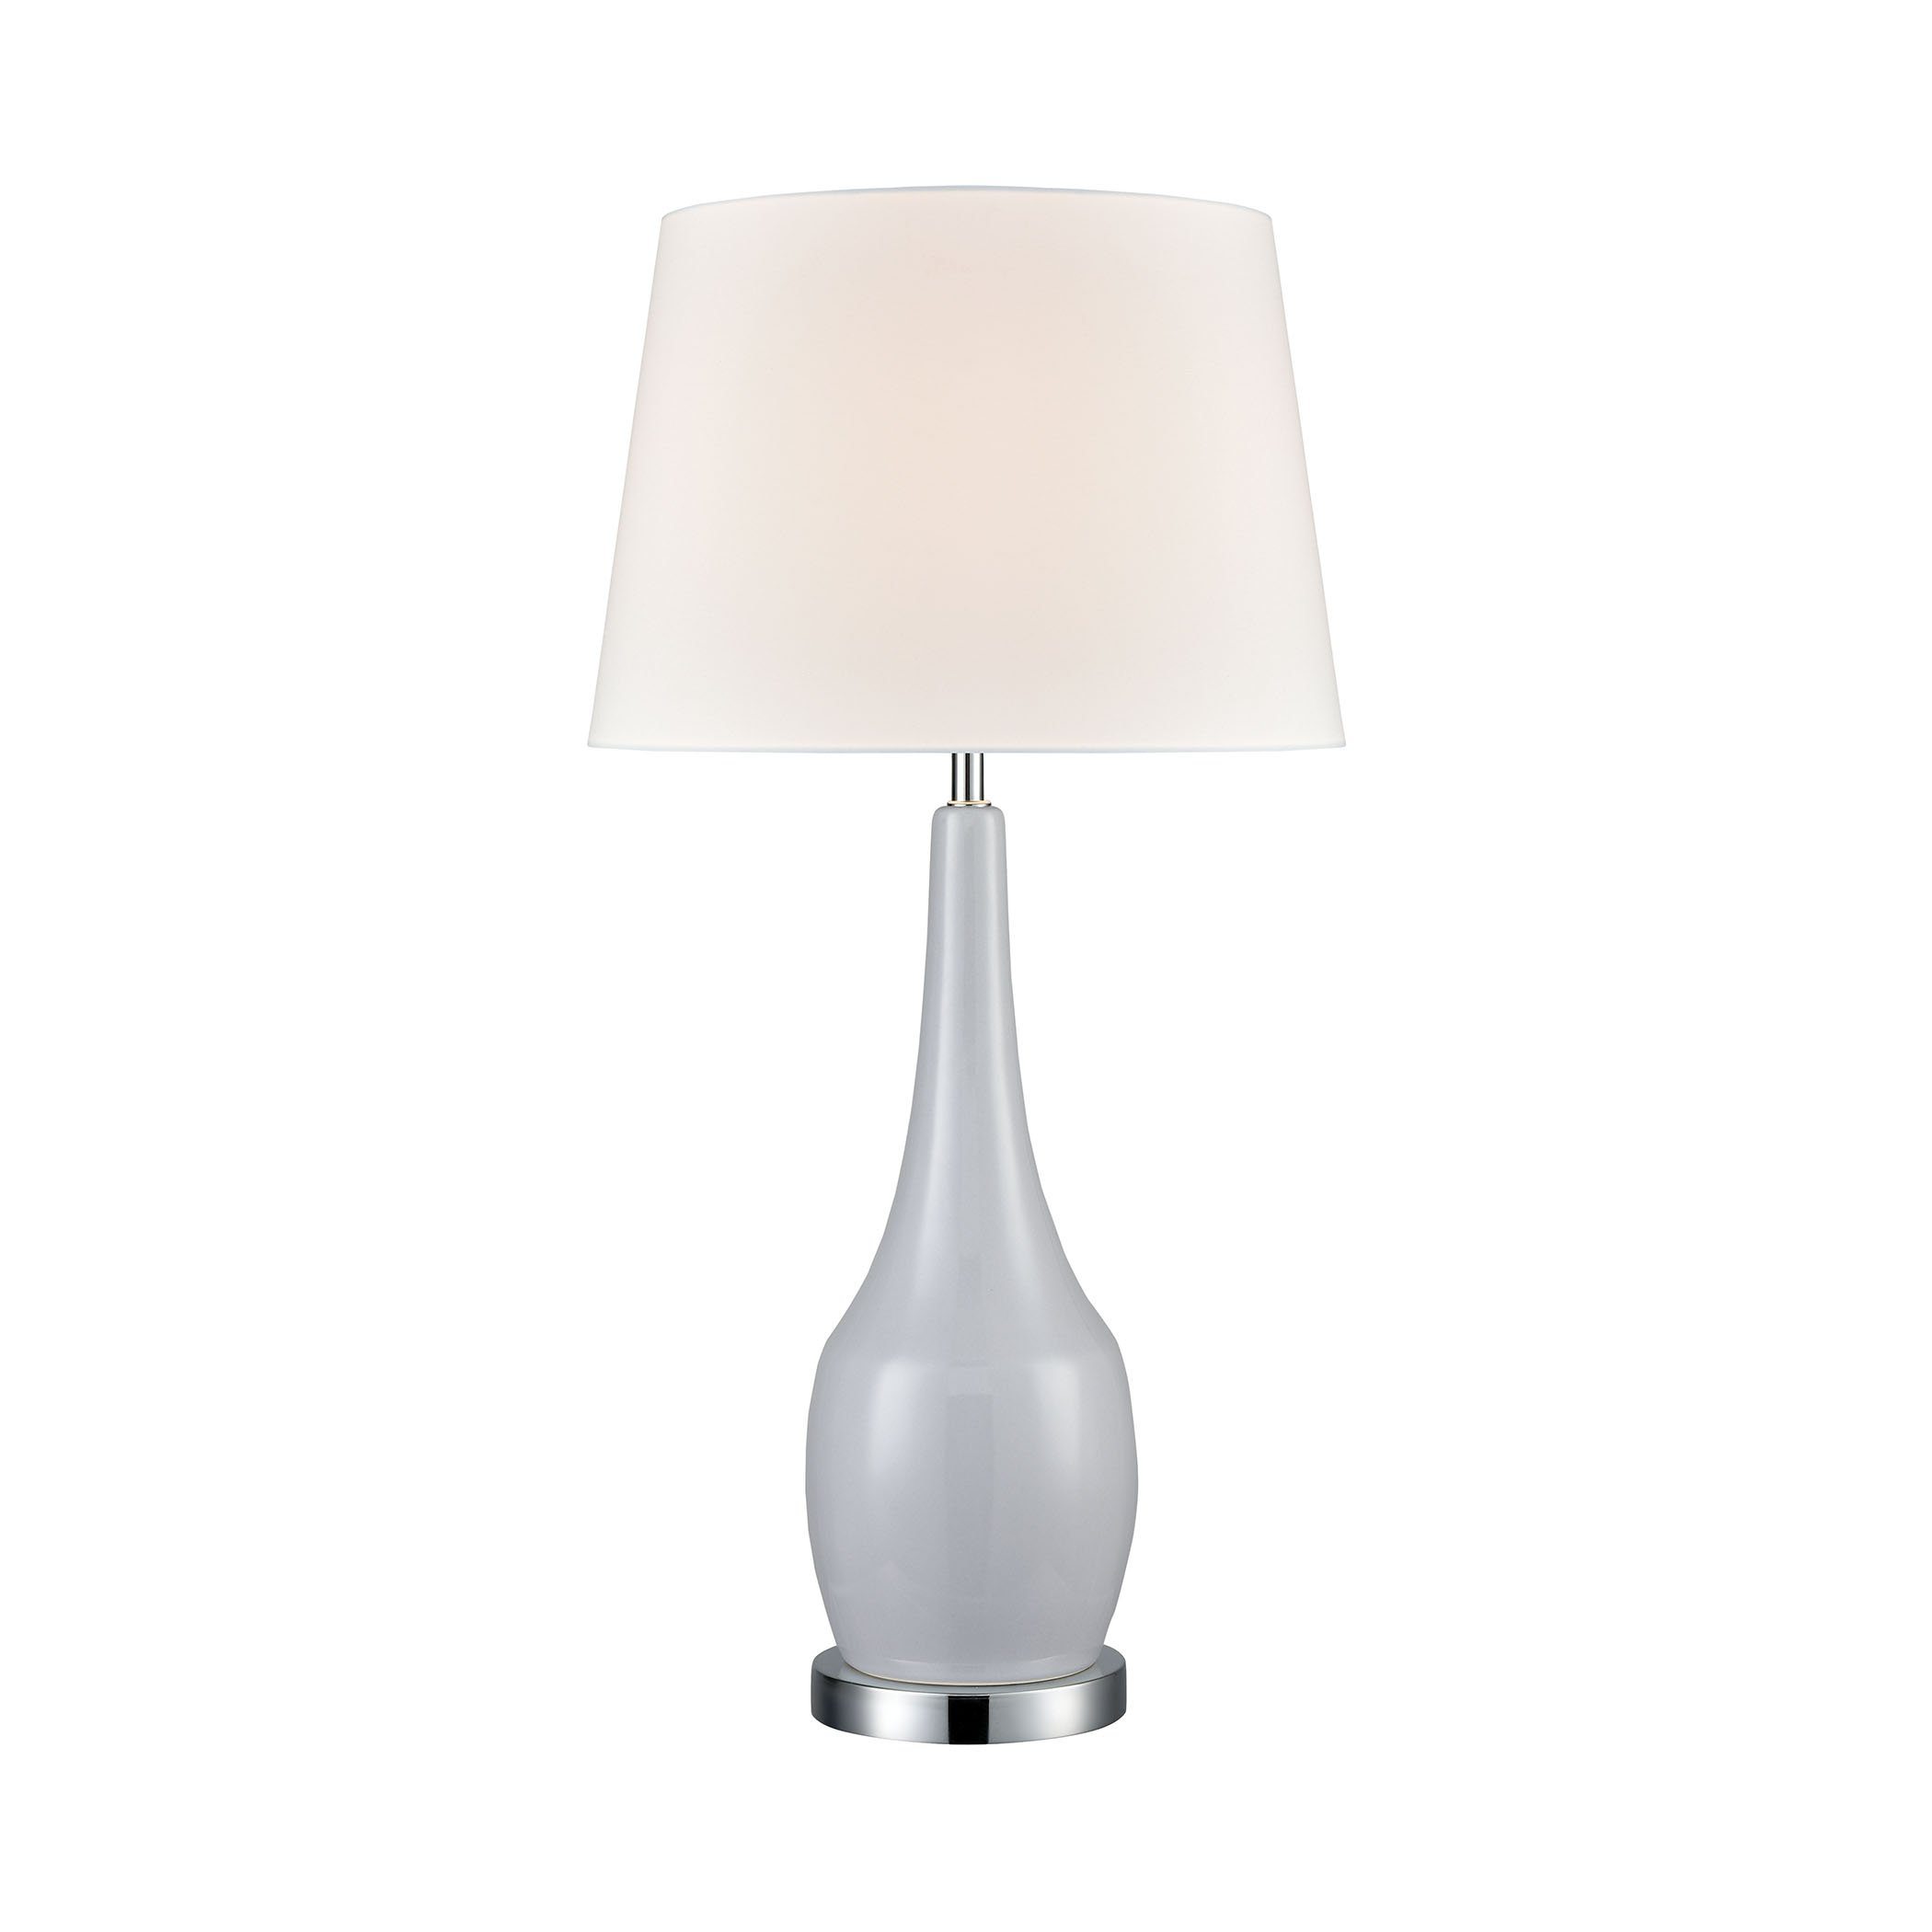 Napoli Table Lamp - Grey Lamps Dimond Lighting 